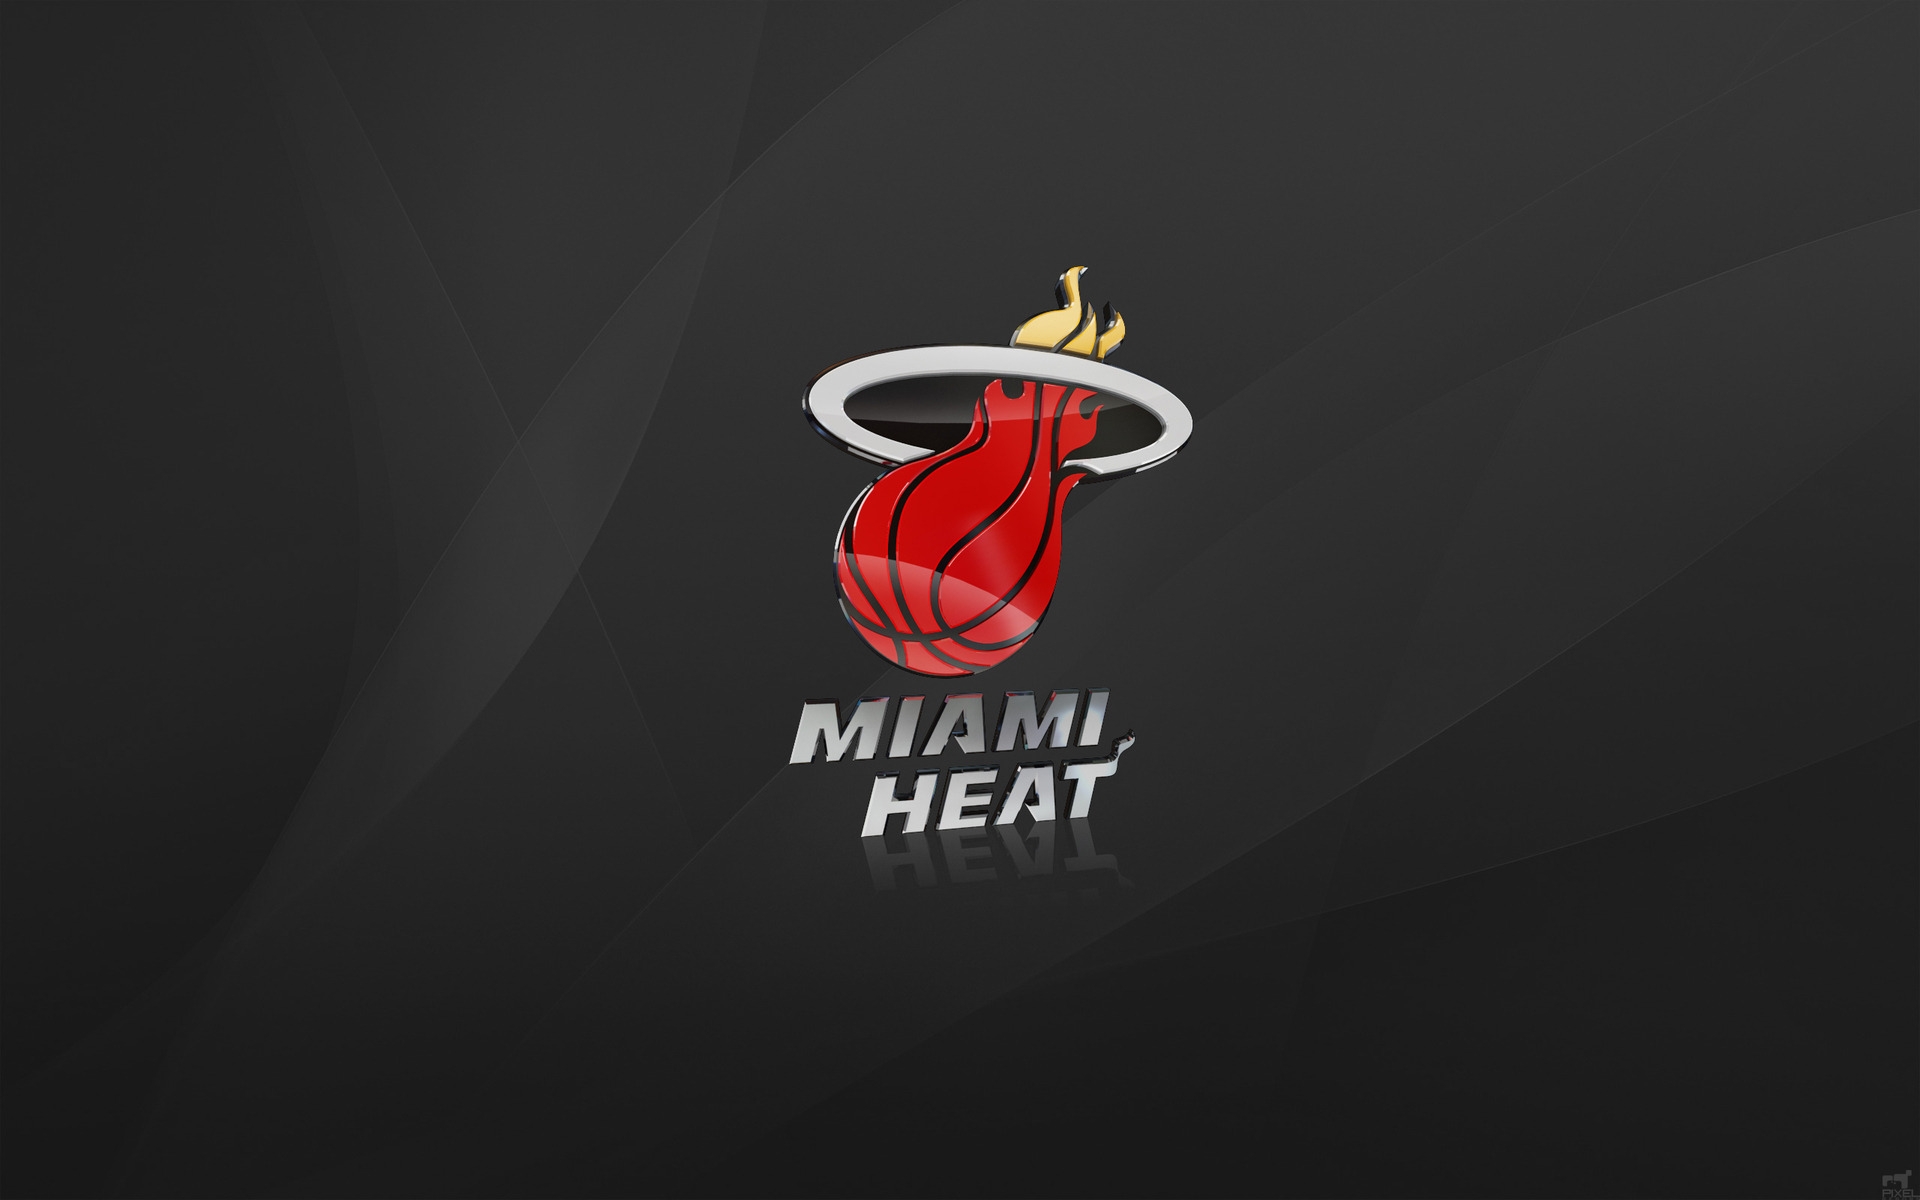 Miami Heat for 1920 x 1200 widescreen resolution